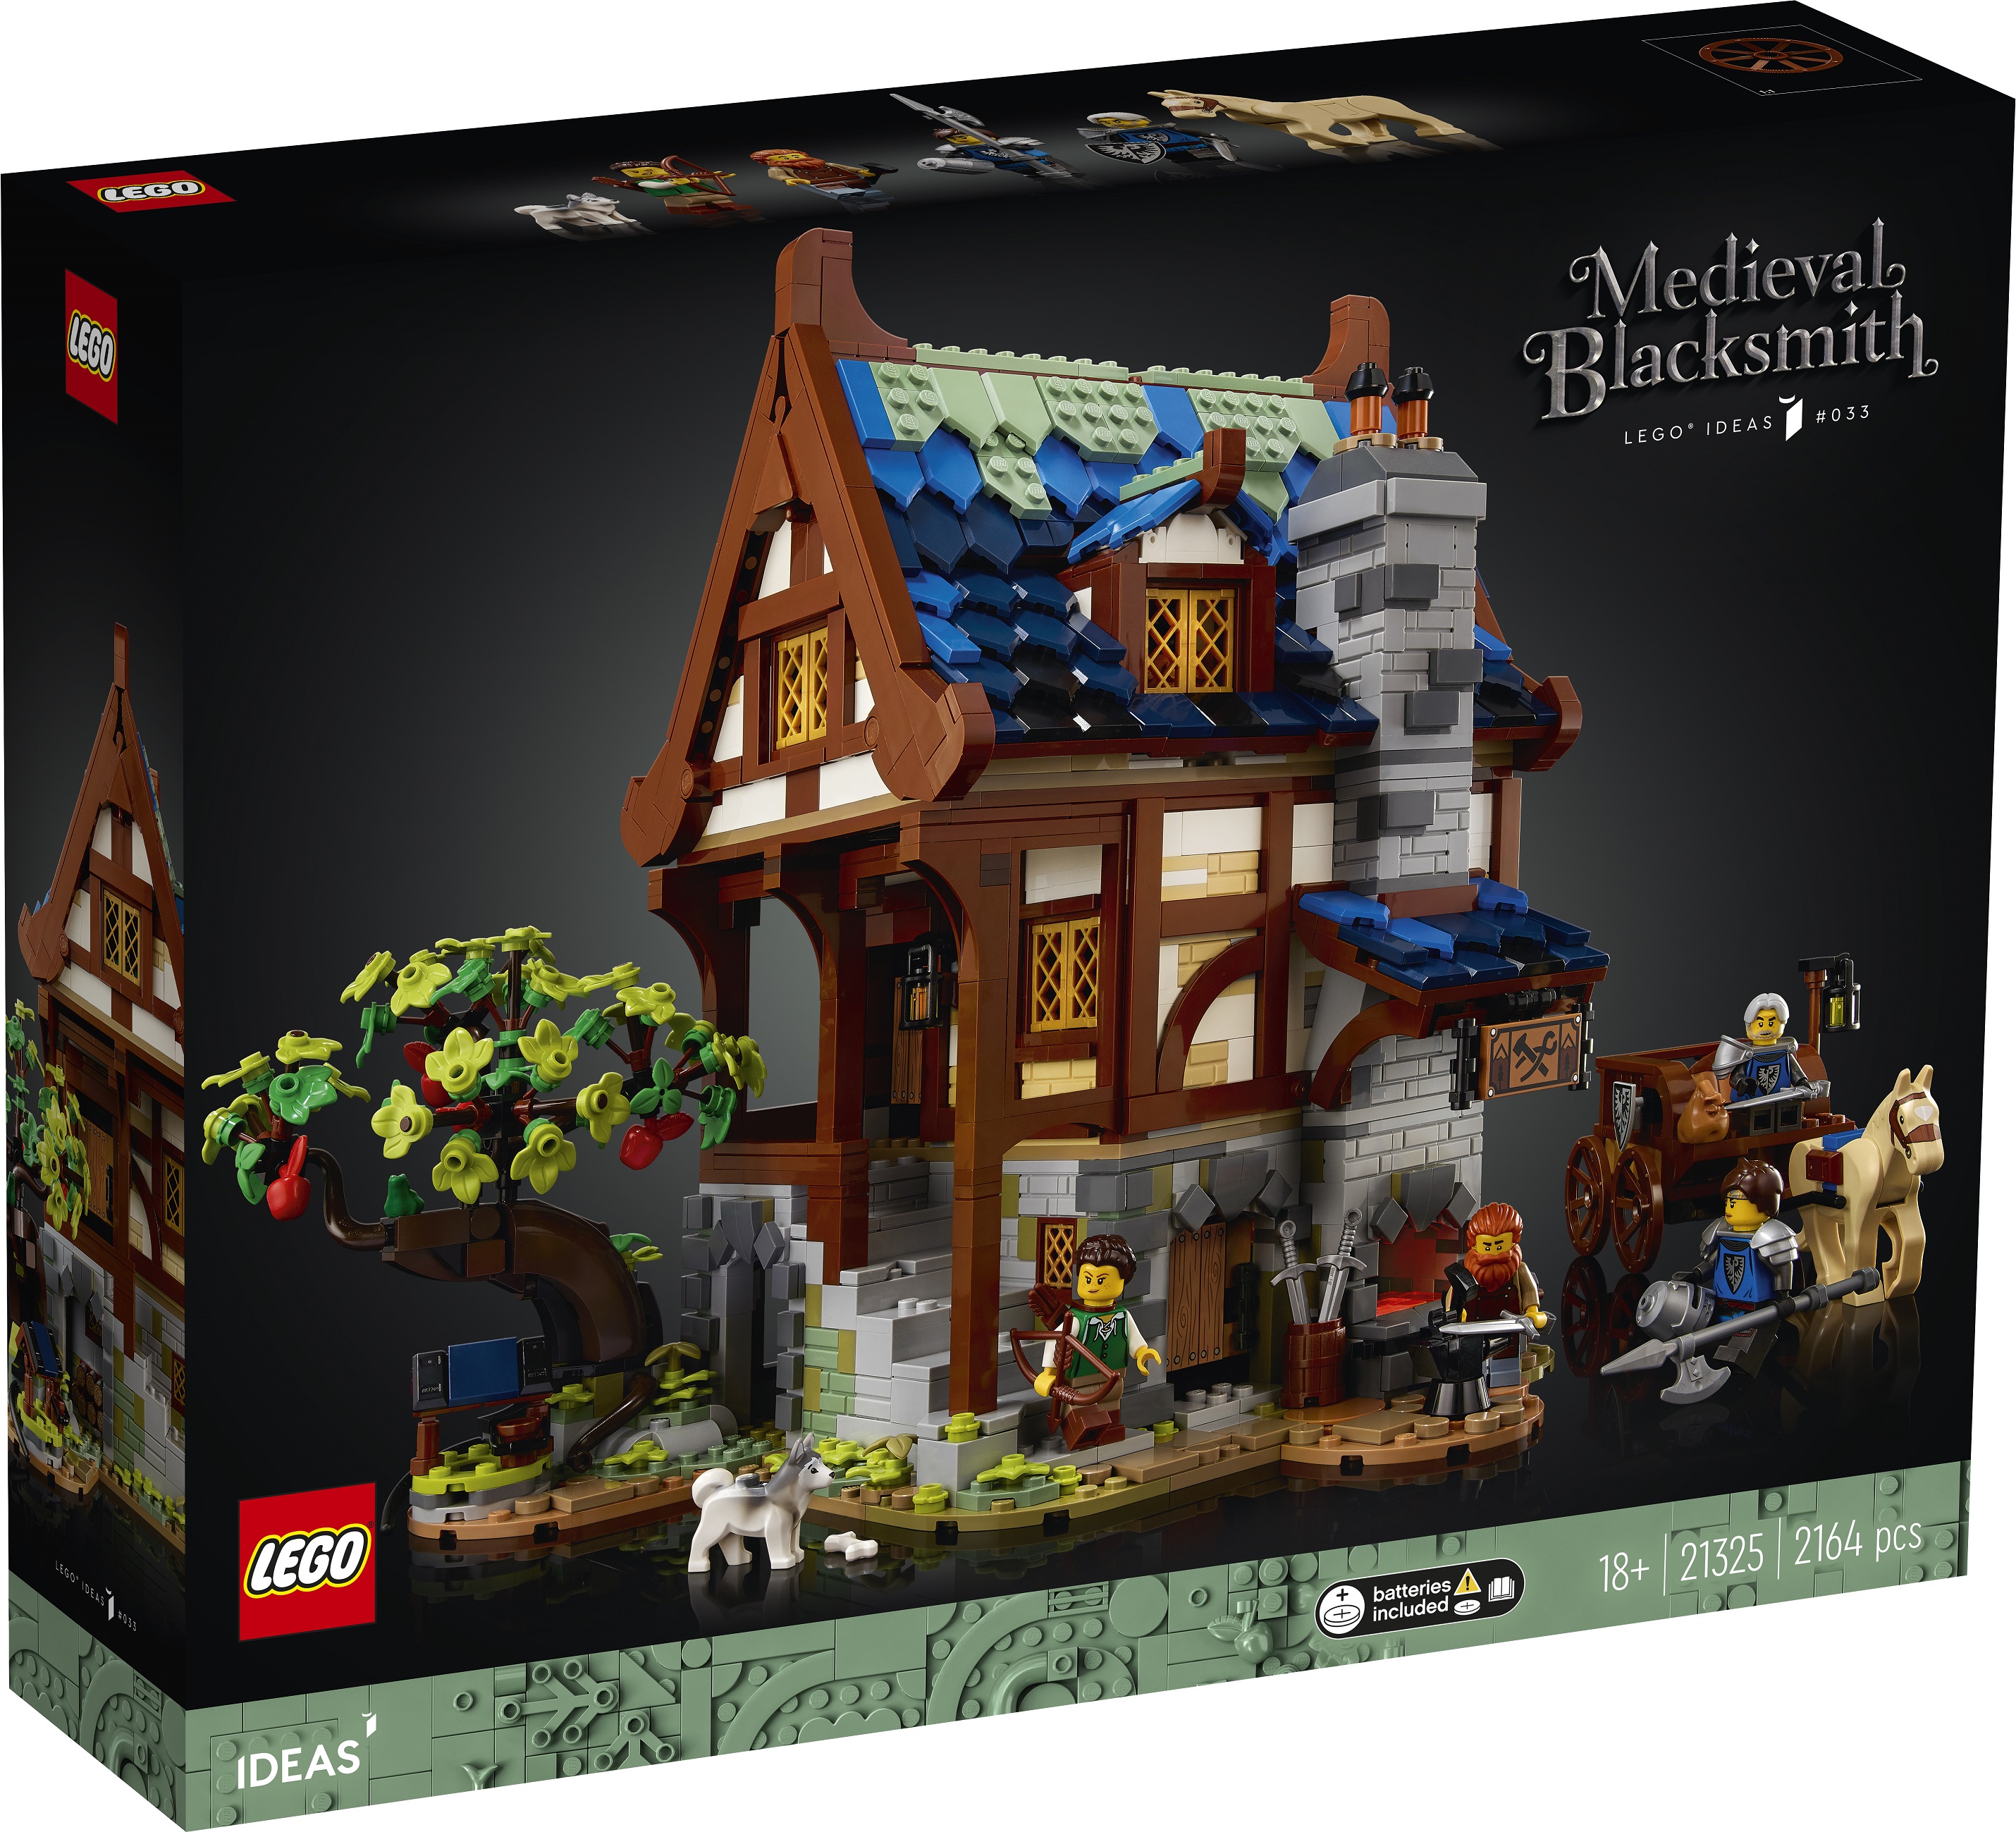 LEGO Ideas 21325 Medieval Blacksmith officially unveiled! Jay's Brick